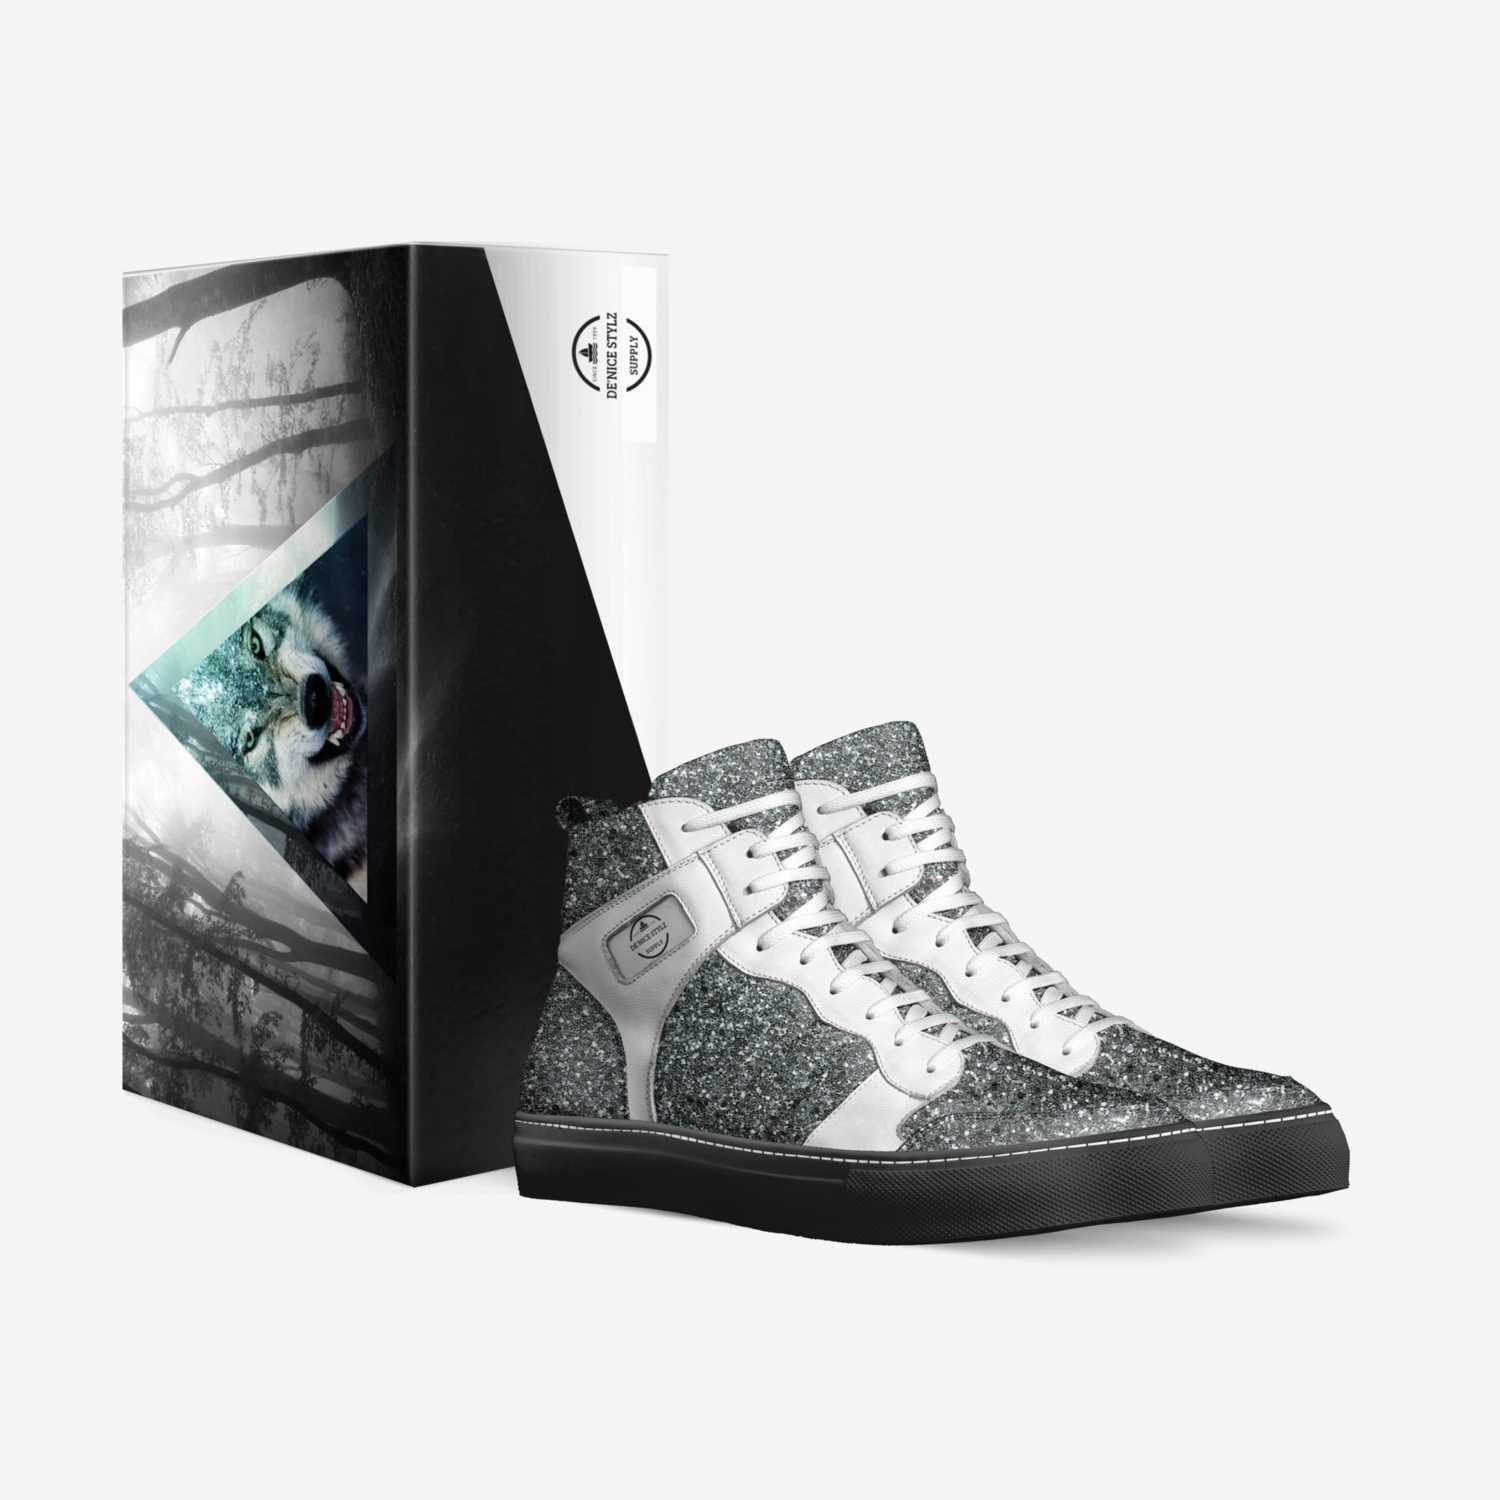 De'Nice Stylz  custom made in Italy shoes by Natasha Robinson | Box view